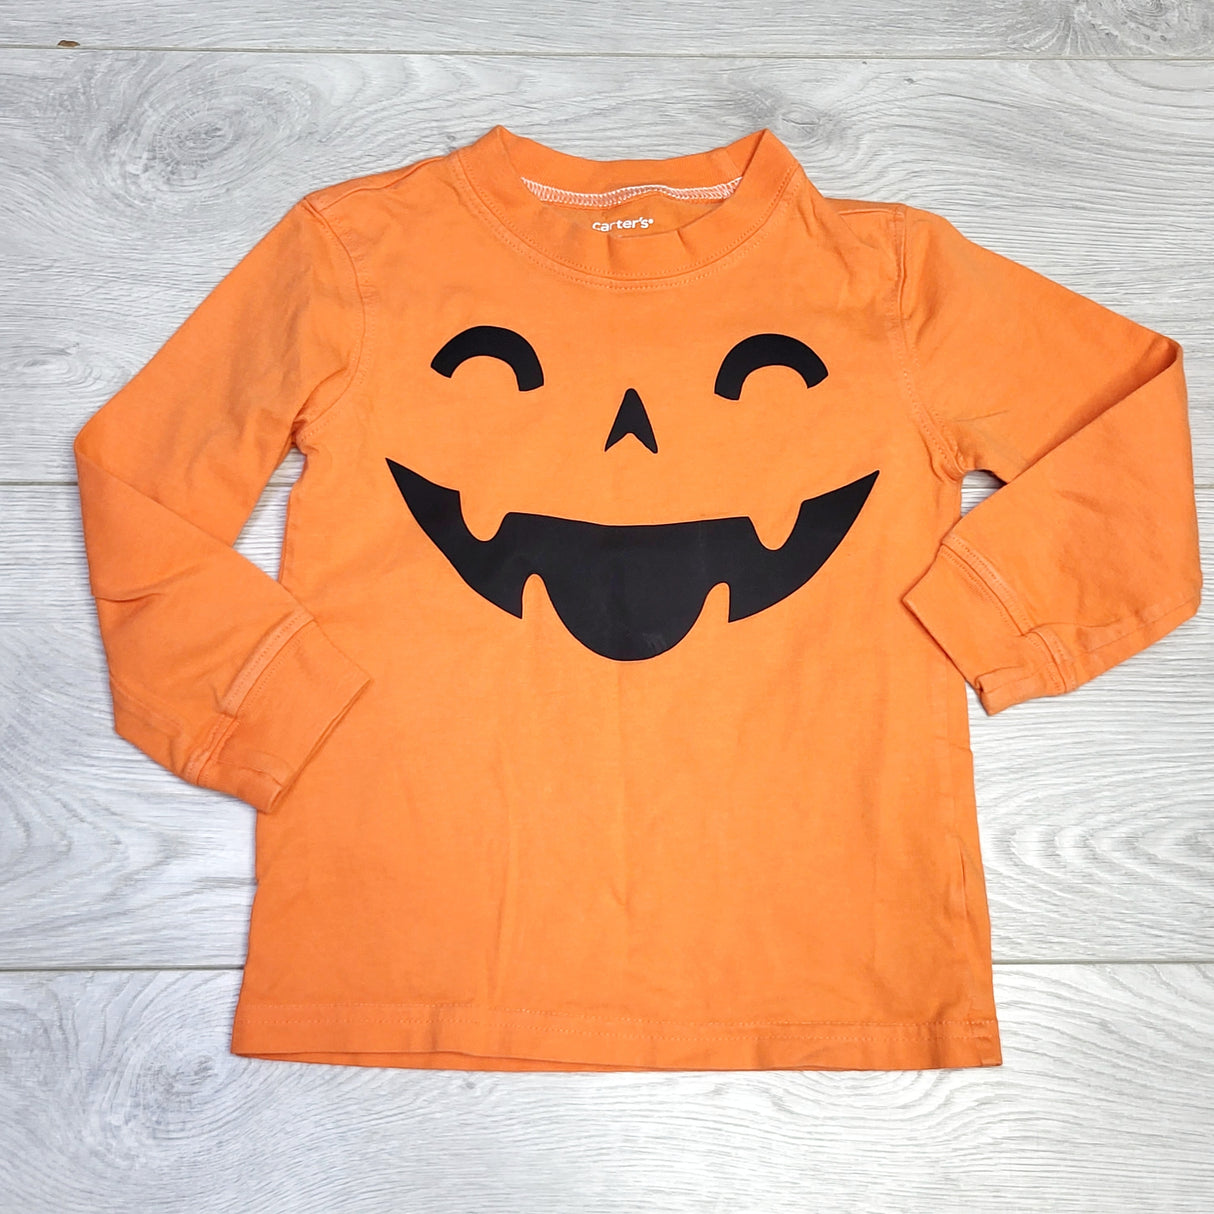 KJHN2 - Carters orange Jack-o-lantern long sleeved shirt. Size 2T